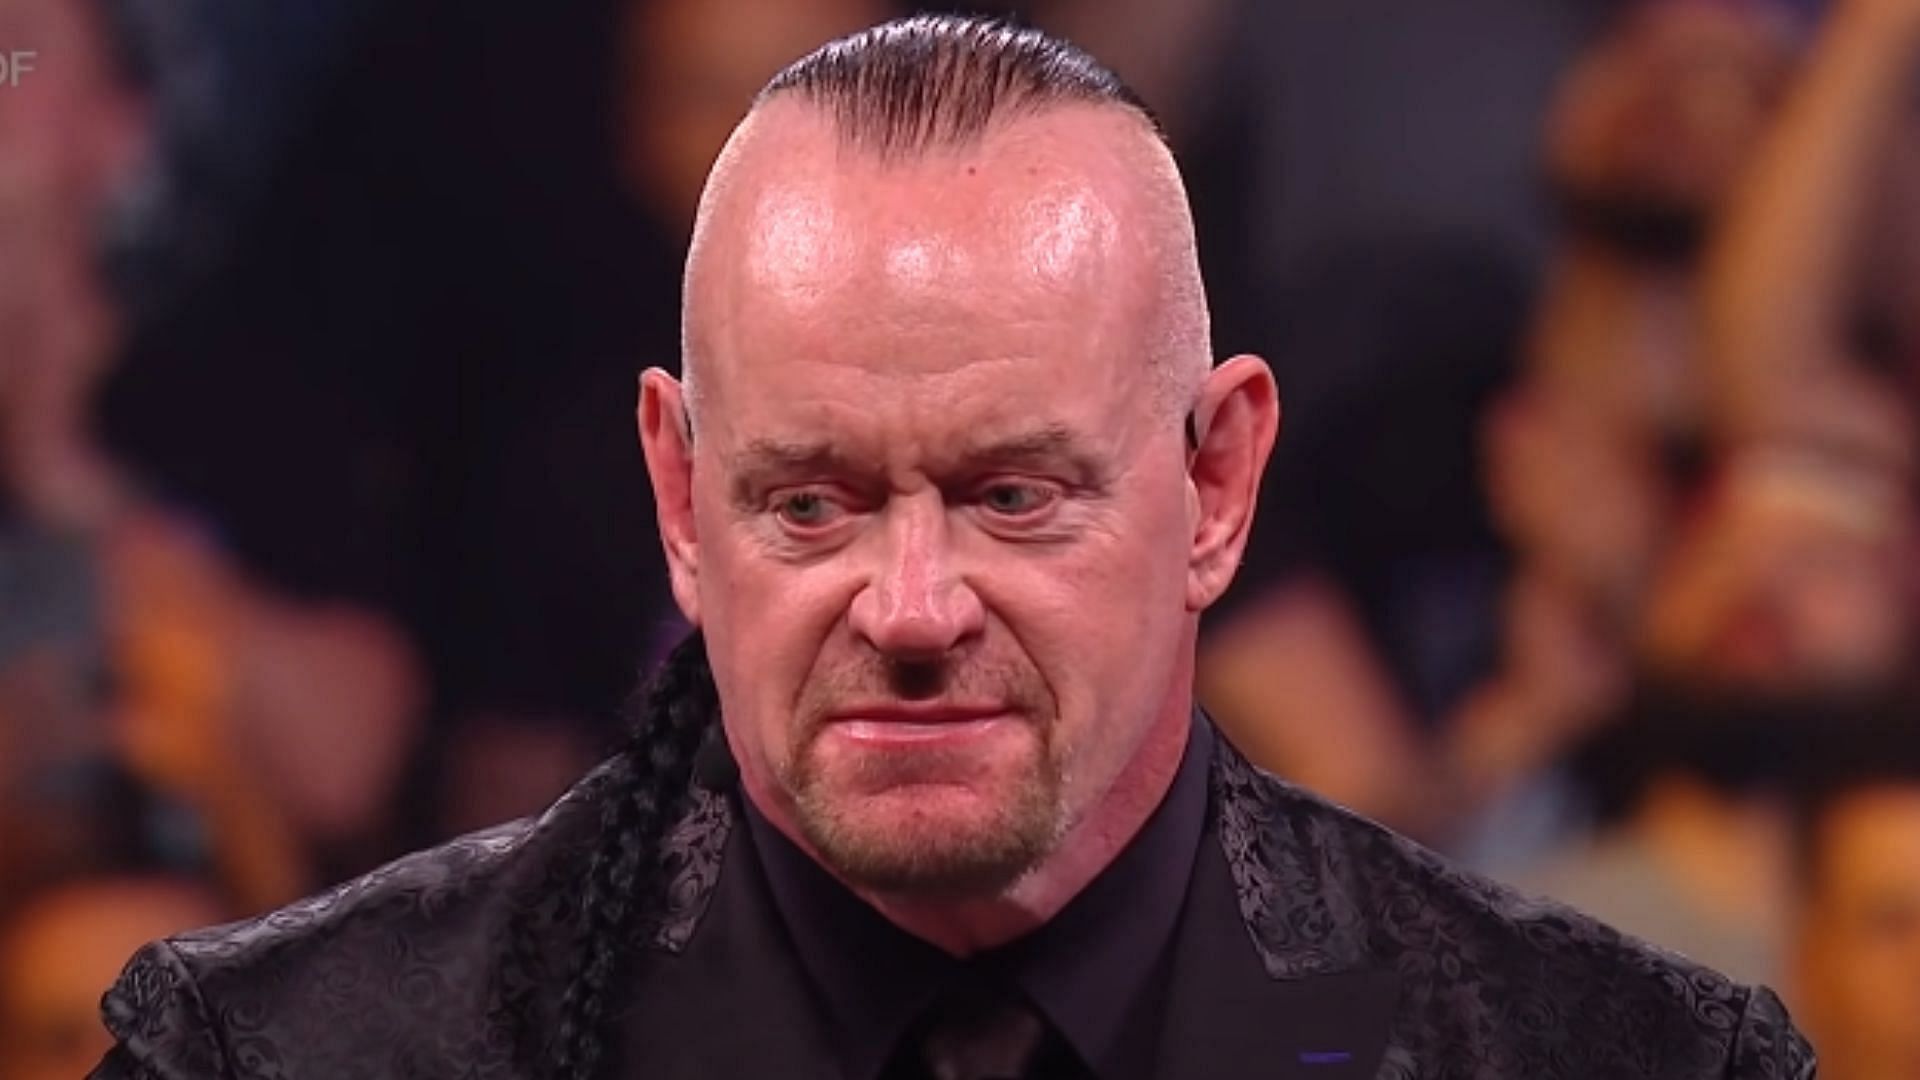 2022 WWE Hall of Famer The Undertaker